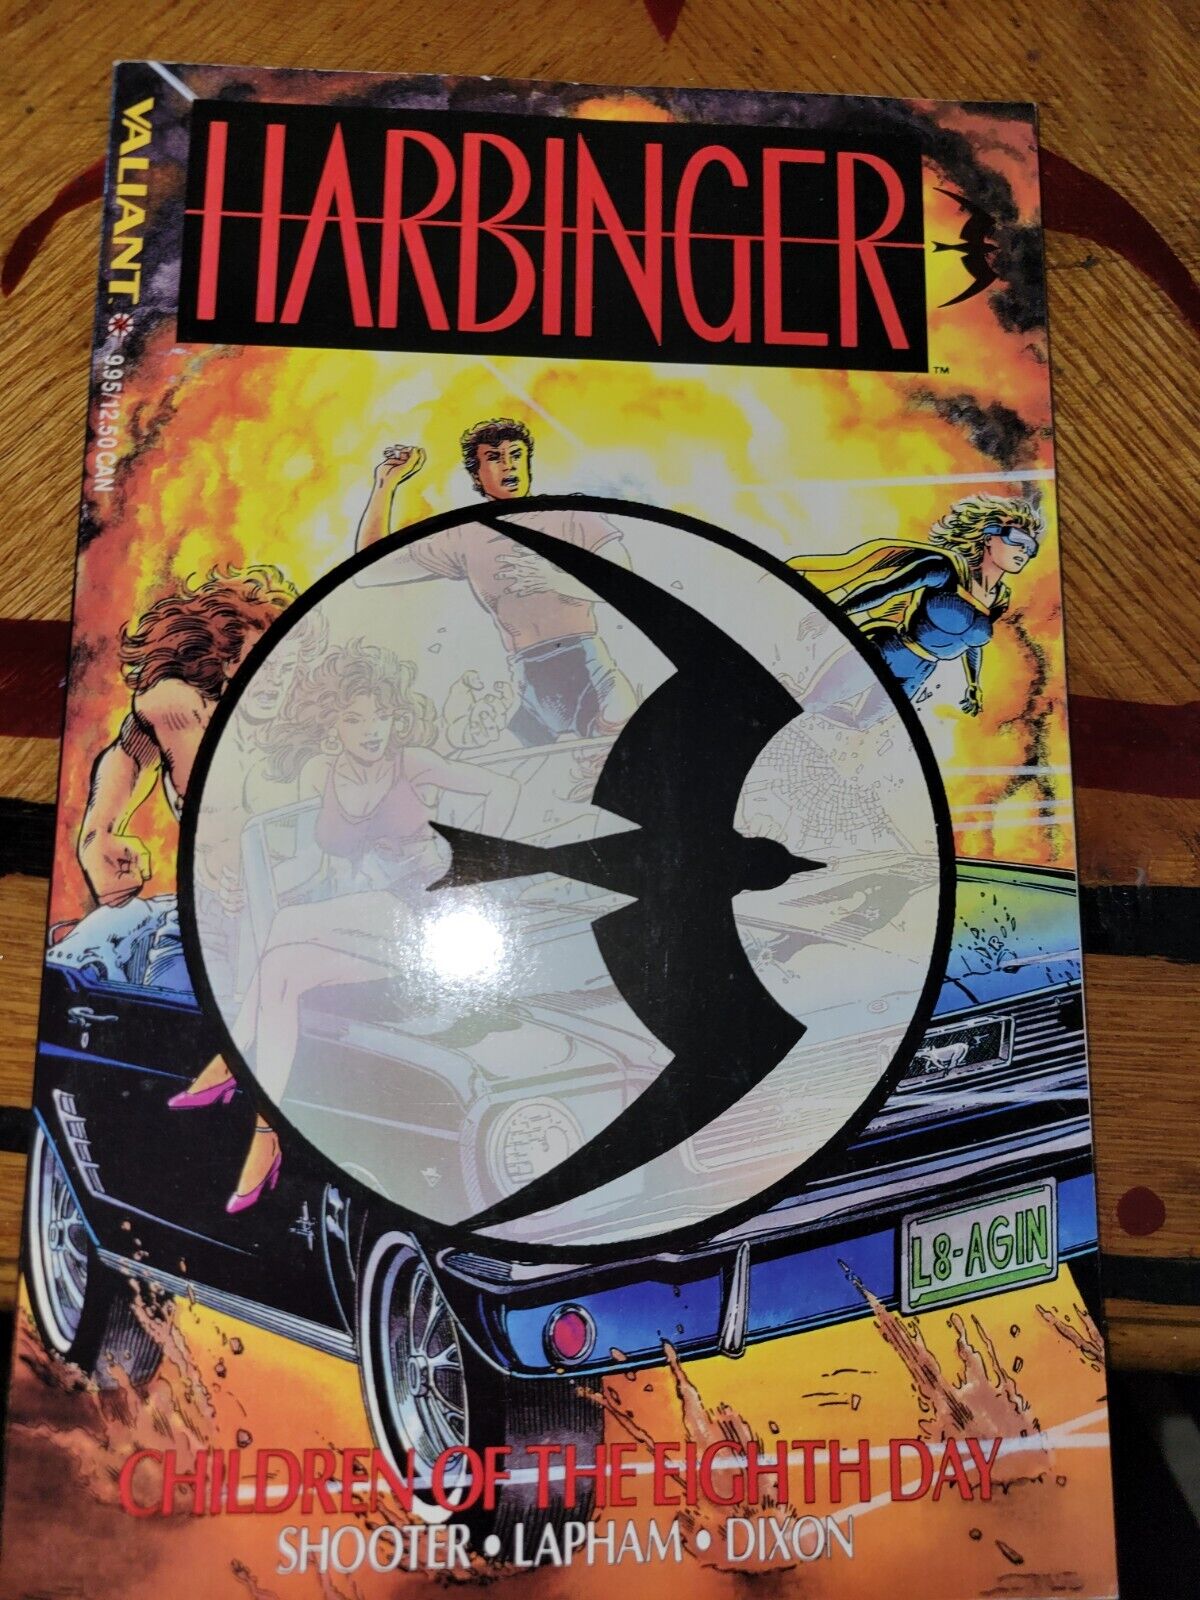 Harbinger Vol. 1 Trade Paperback [TPB] (Valiant, 1992)- F/VF- Combined Shipping